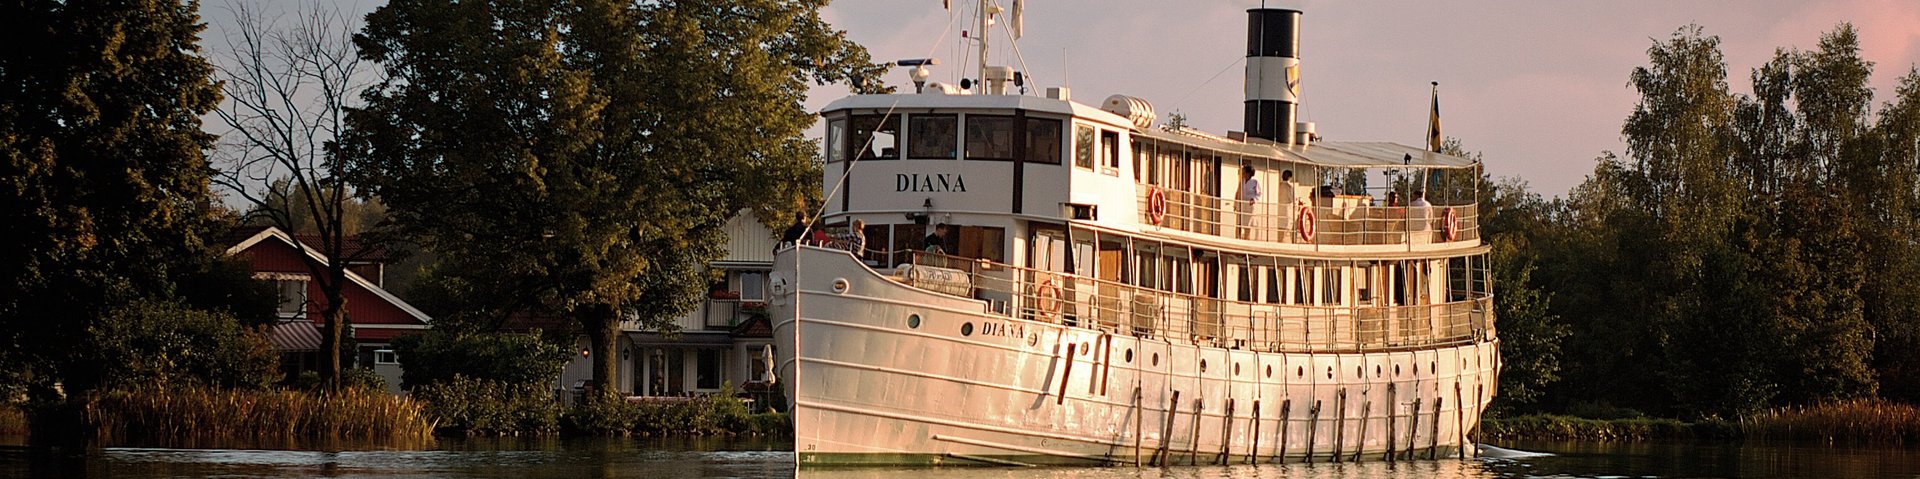 Diana auf dem Götakanal